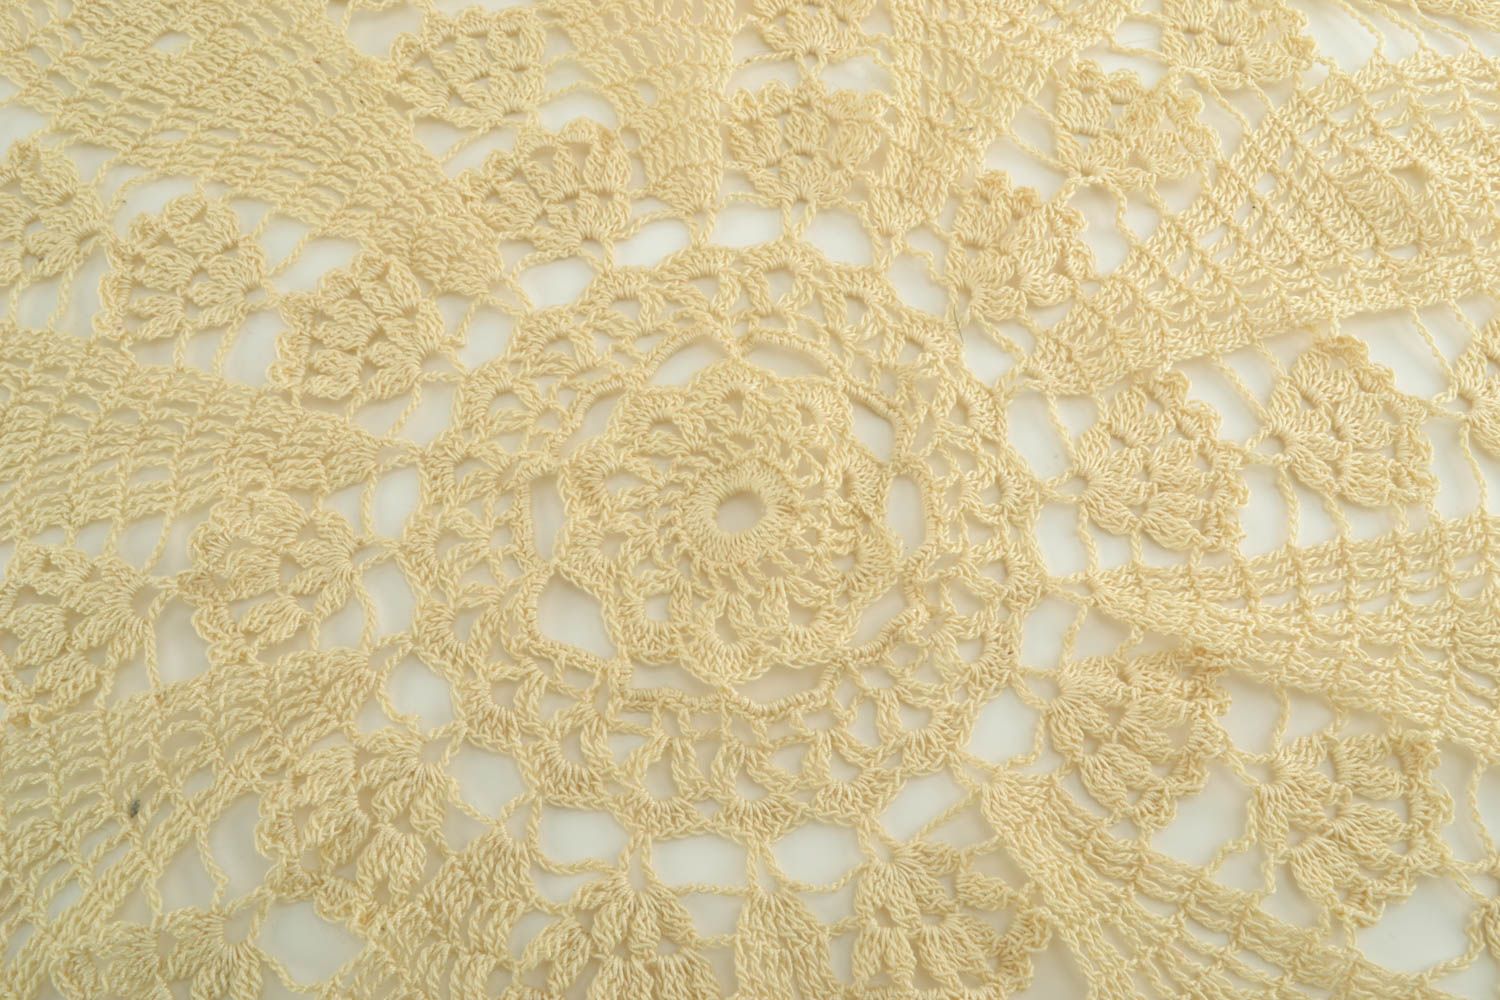 Lace crochet tablecloth photo 3